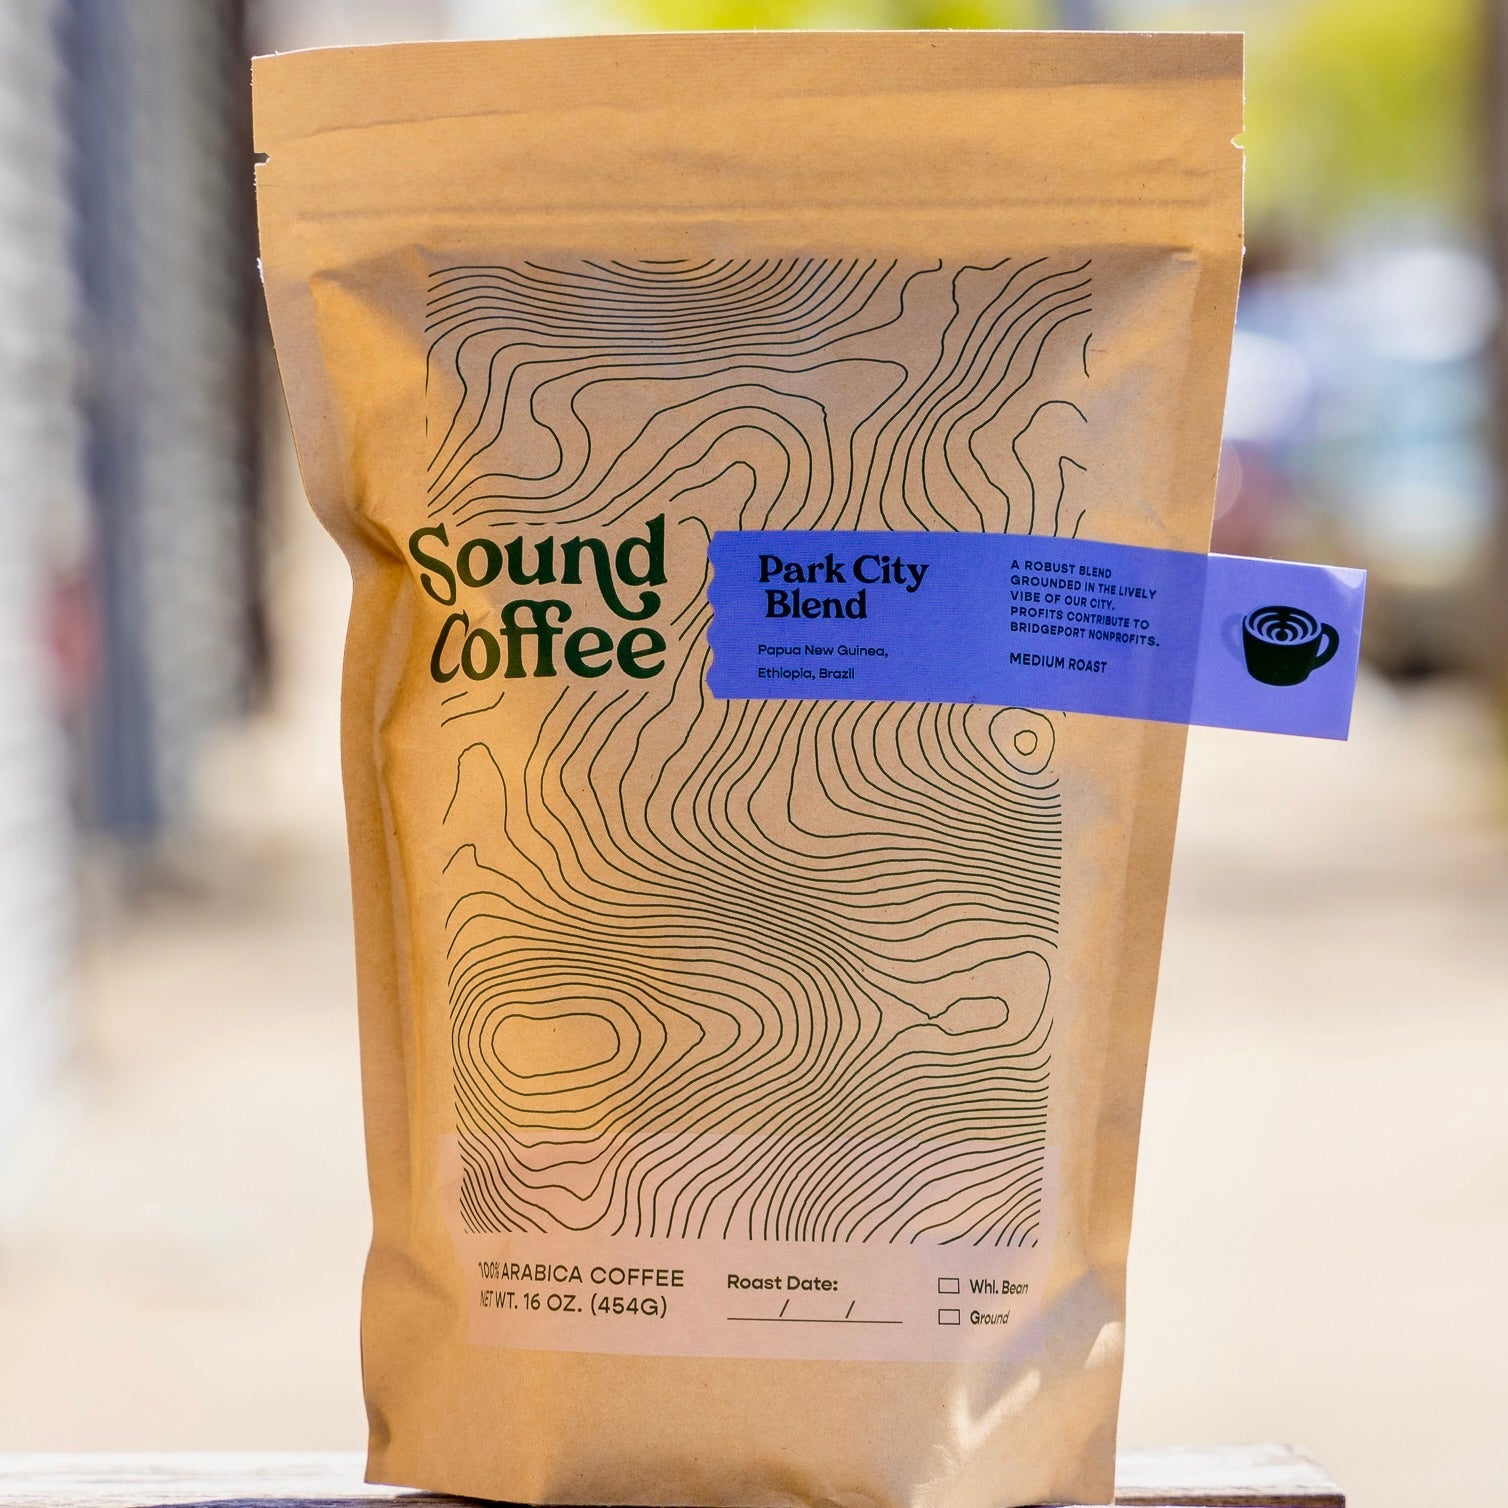 Park City Blend - Sound Coffee